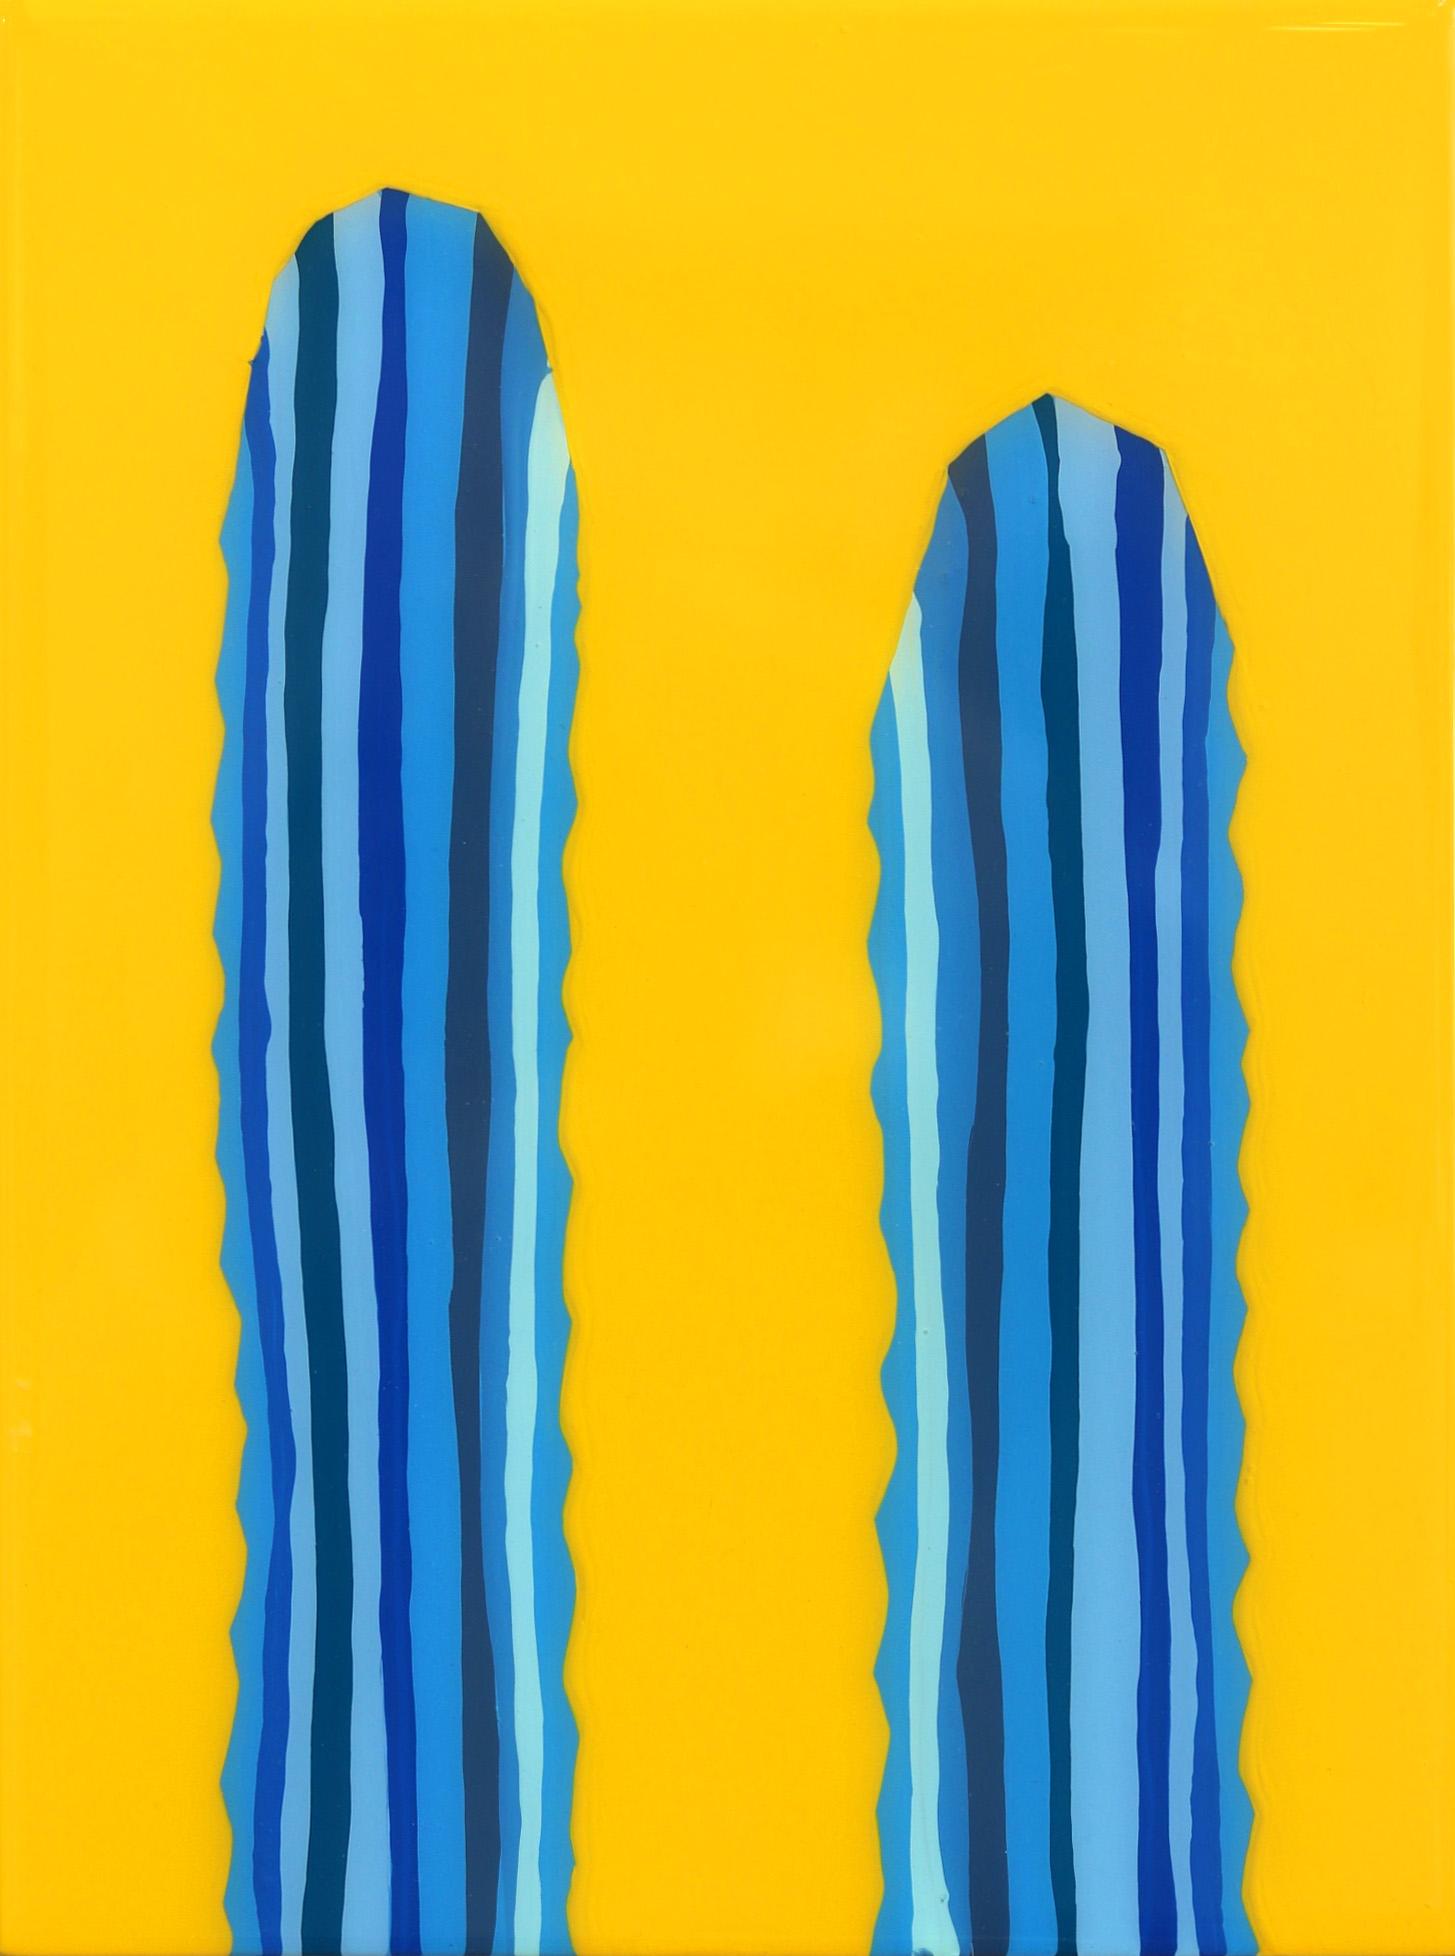 Lil Yeller- Vibrant Gelb Blau Südwesten inspiriert Pop Art Kaktus Malerei